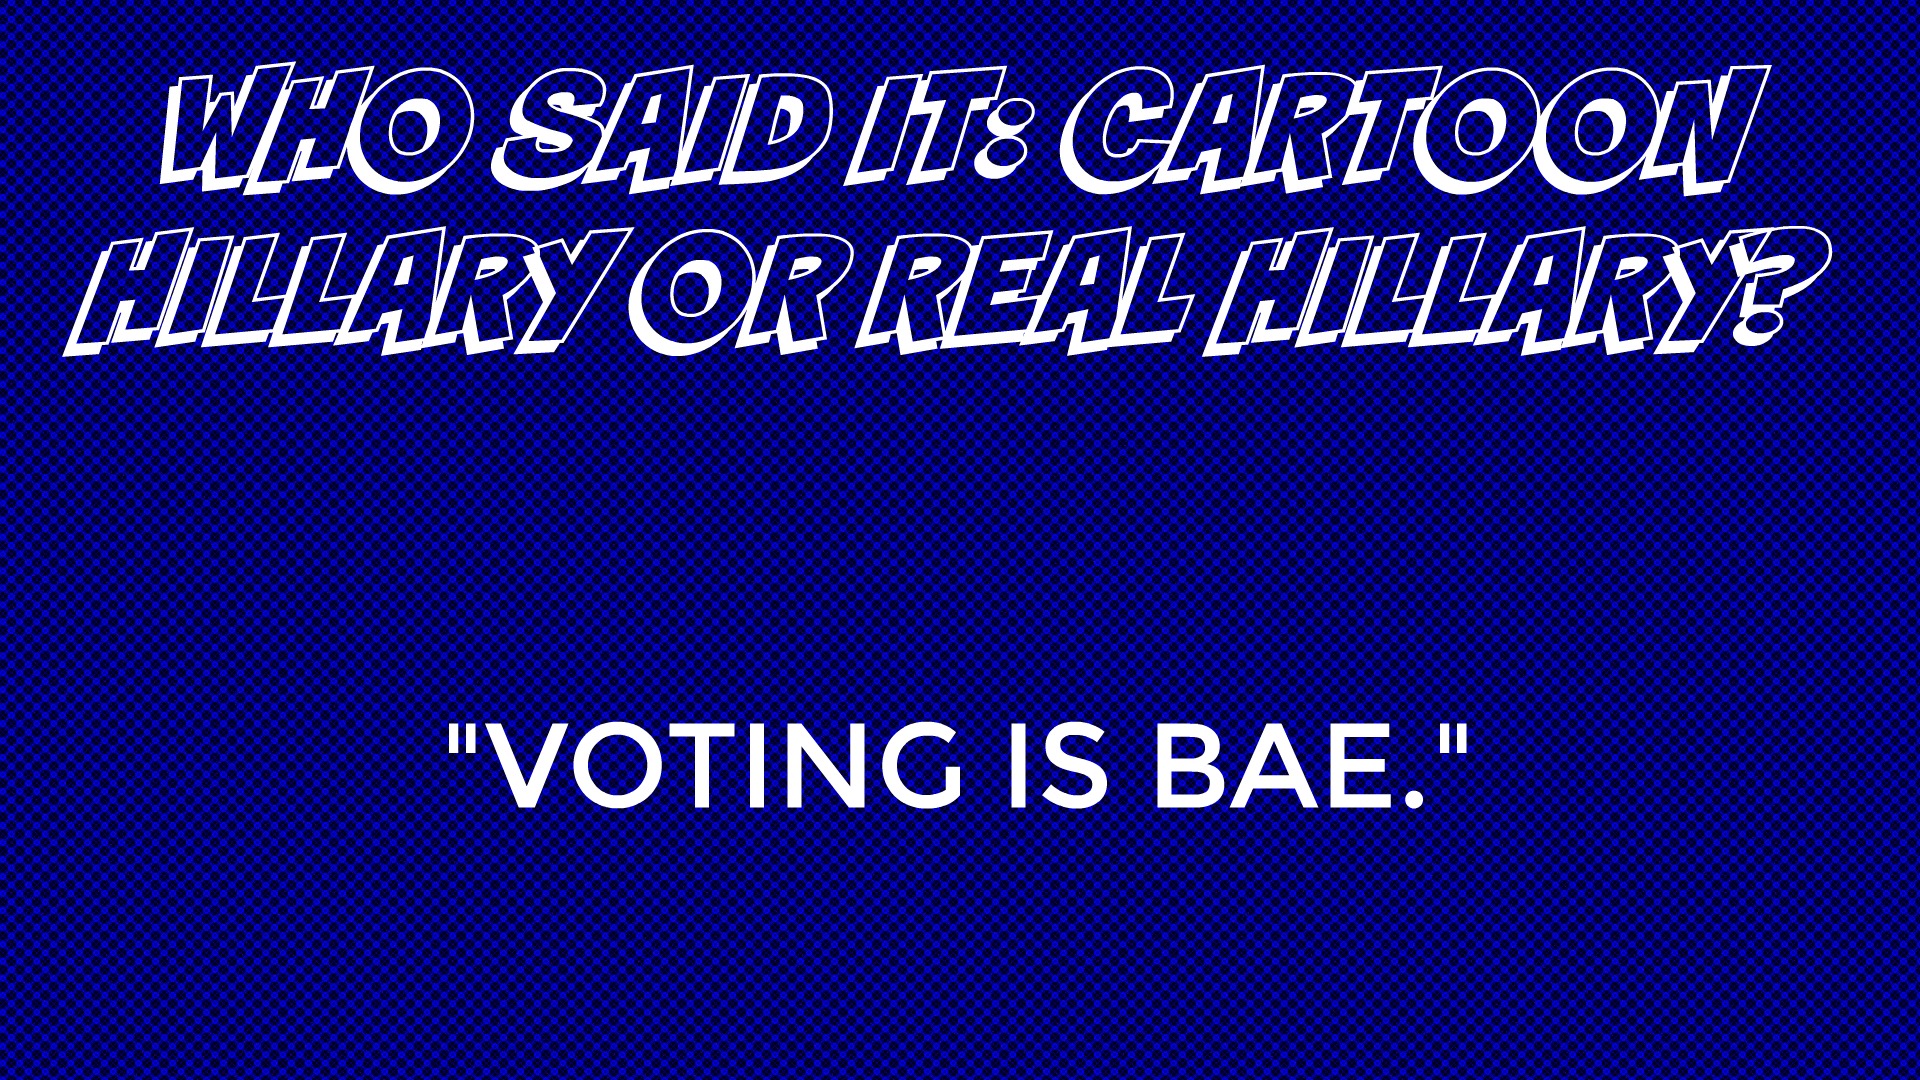 Who said it: Cartoon Hillary or Real Hillary?